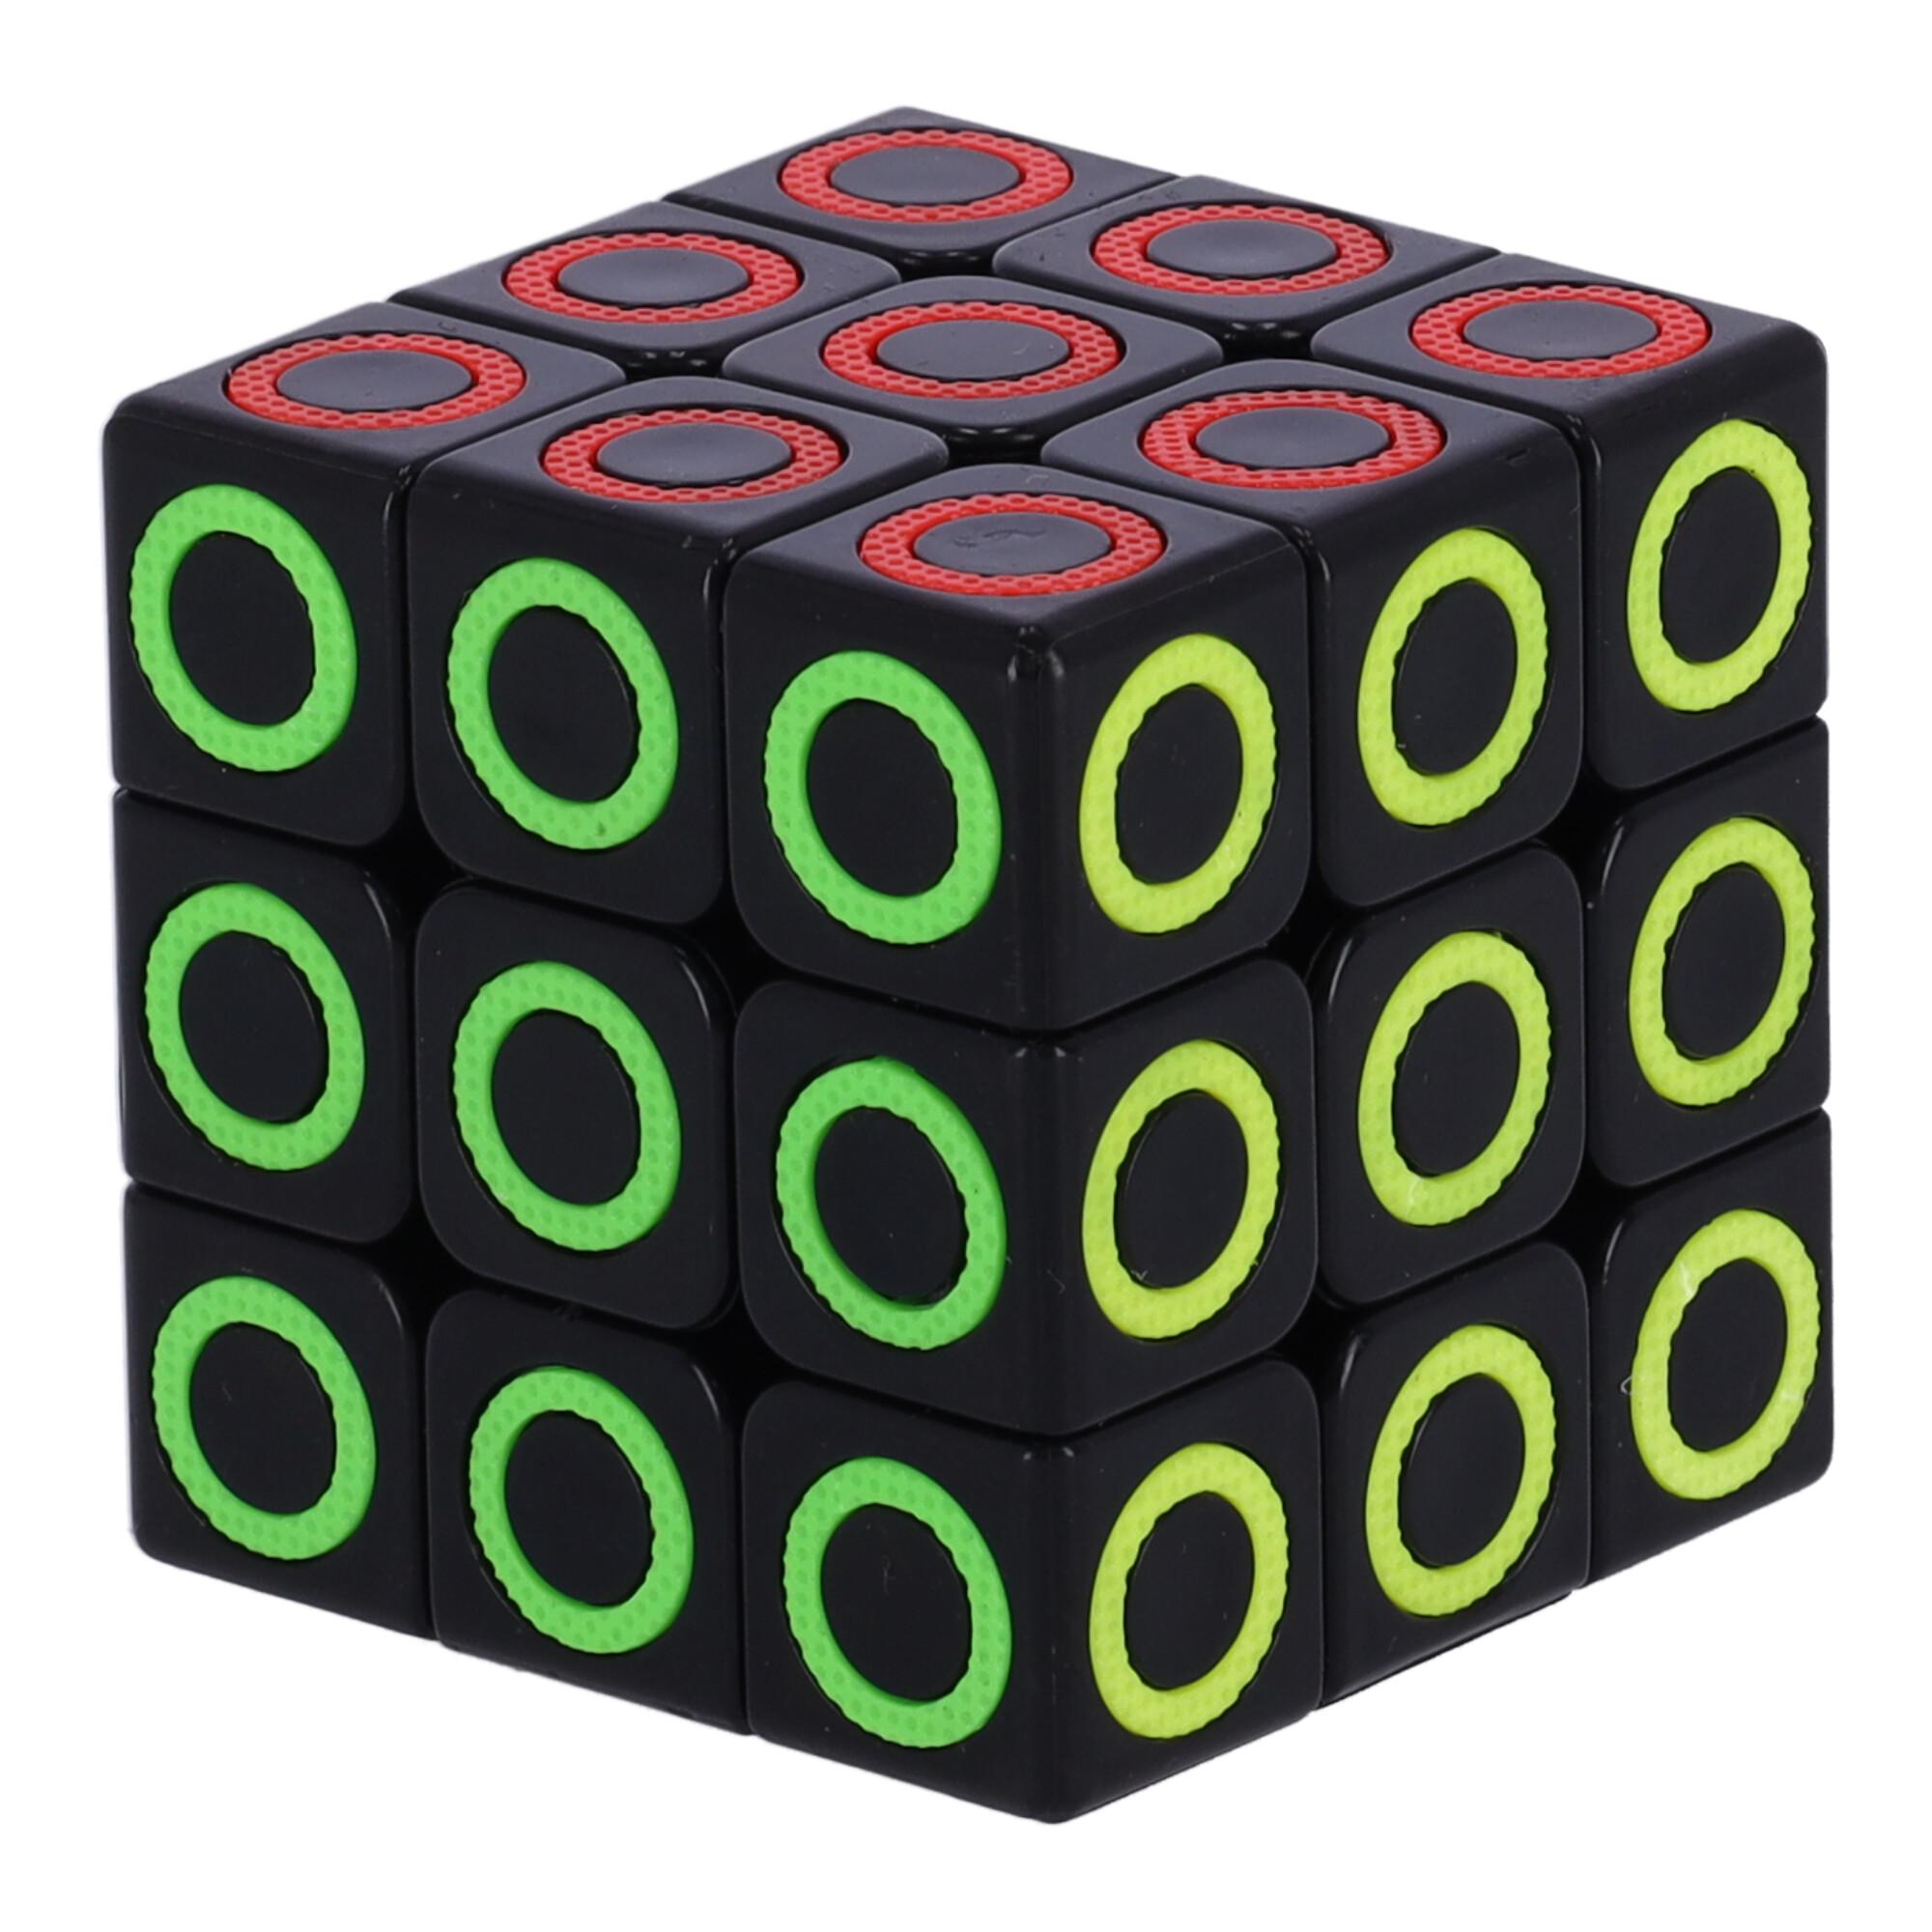 Modern jigsaw puzzle, Rubik's Cube - type I